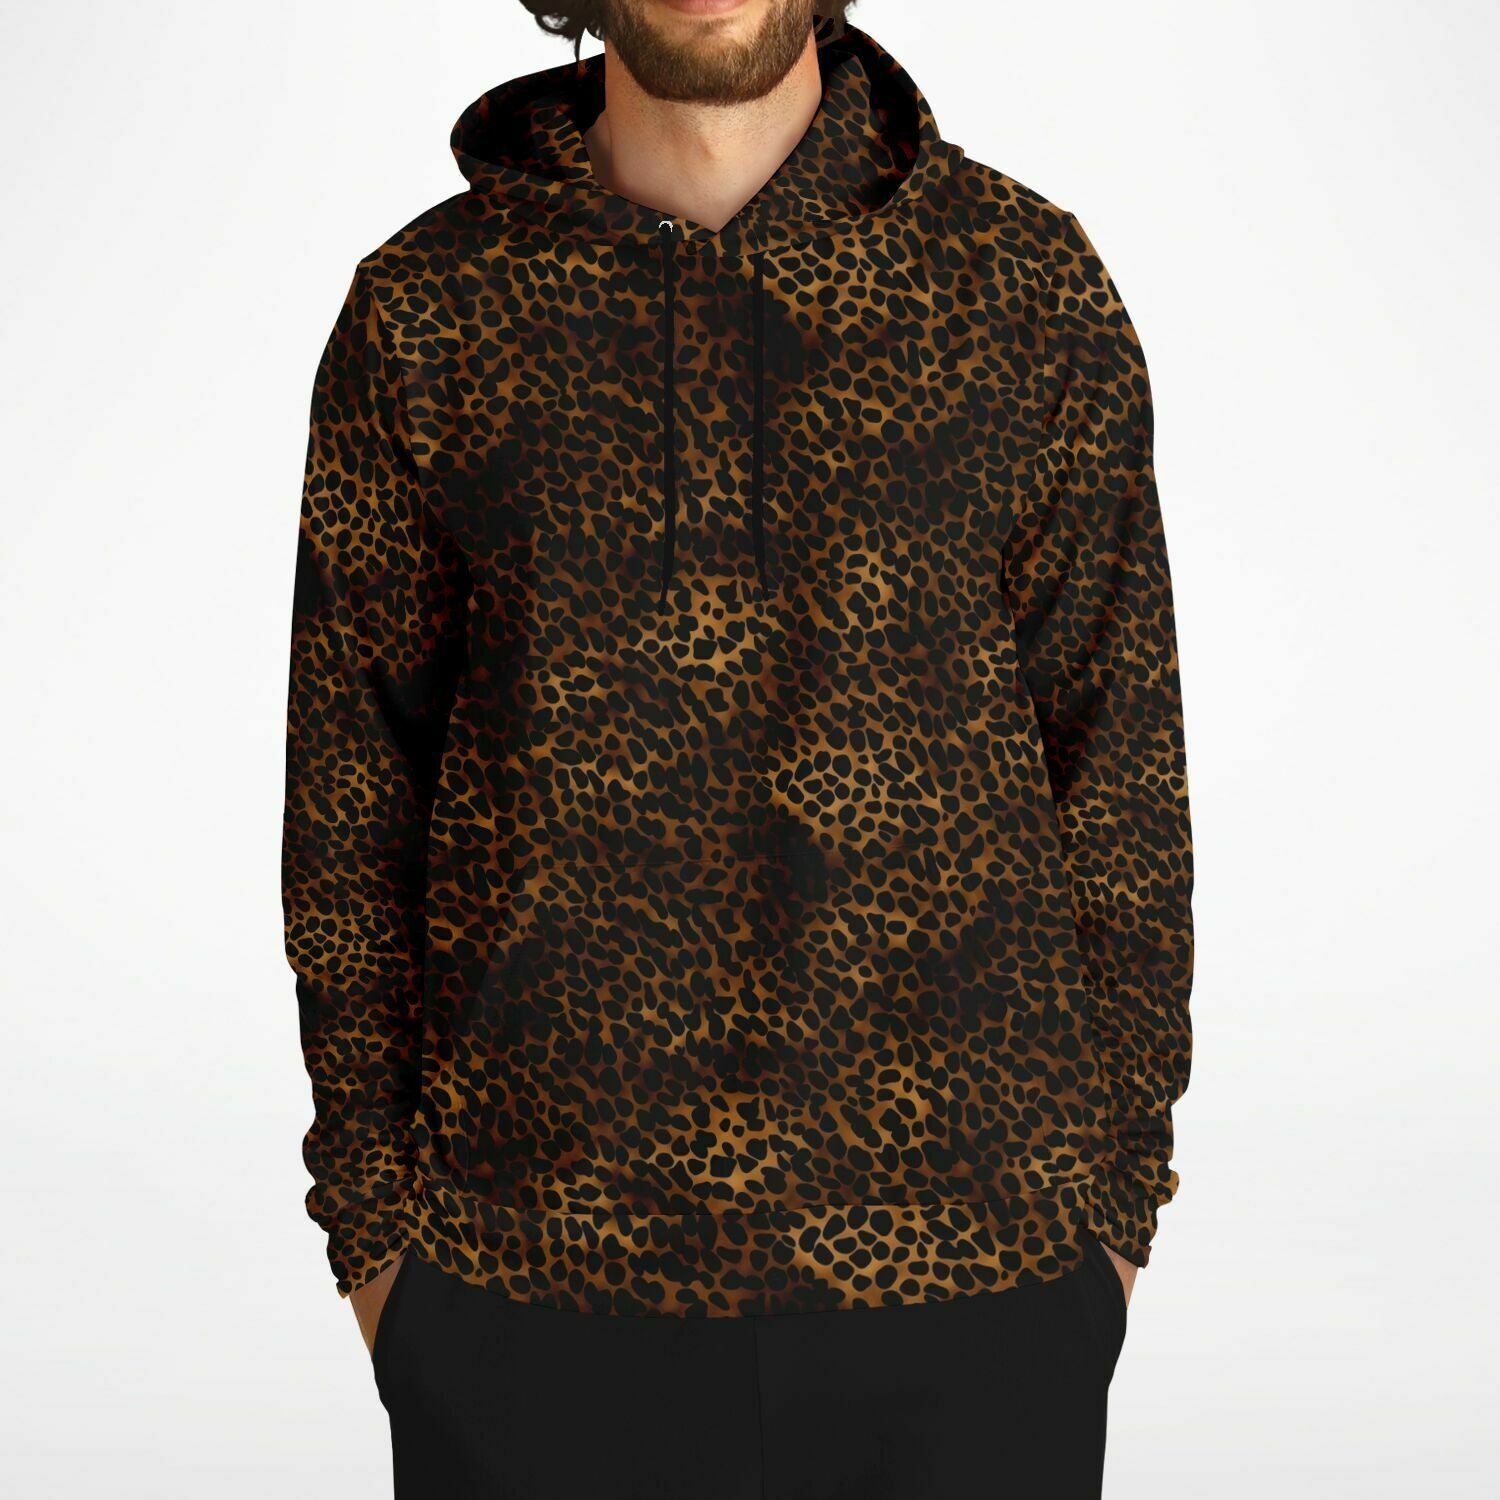 Leopard Print Hoodie, Animal Cheetah Dark Brown Black Pullover Men Women Adult Aesthetic Graphic Cotton Hooded Sweatshirt with Pockets Starcove Fashion